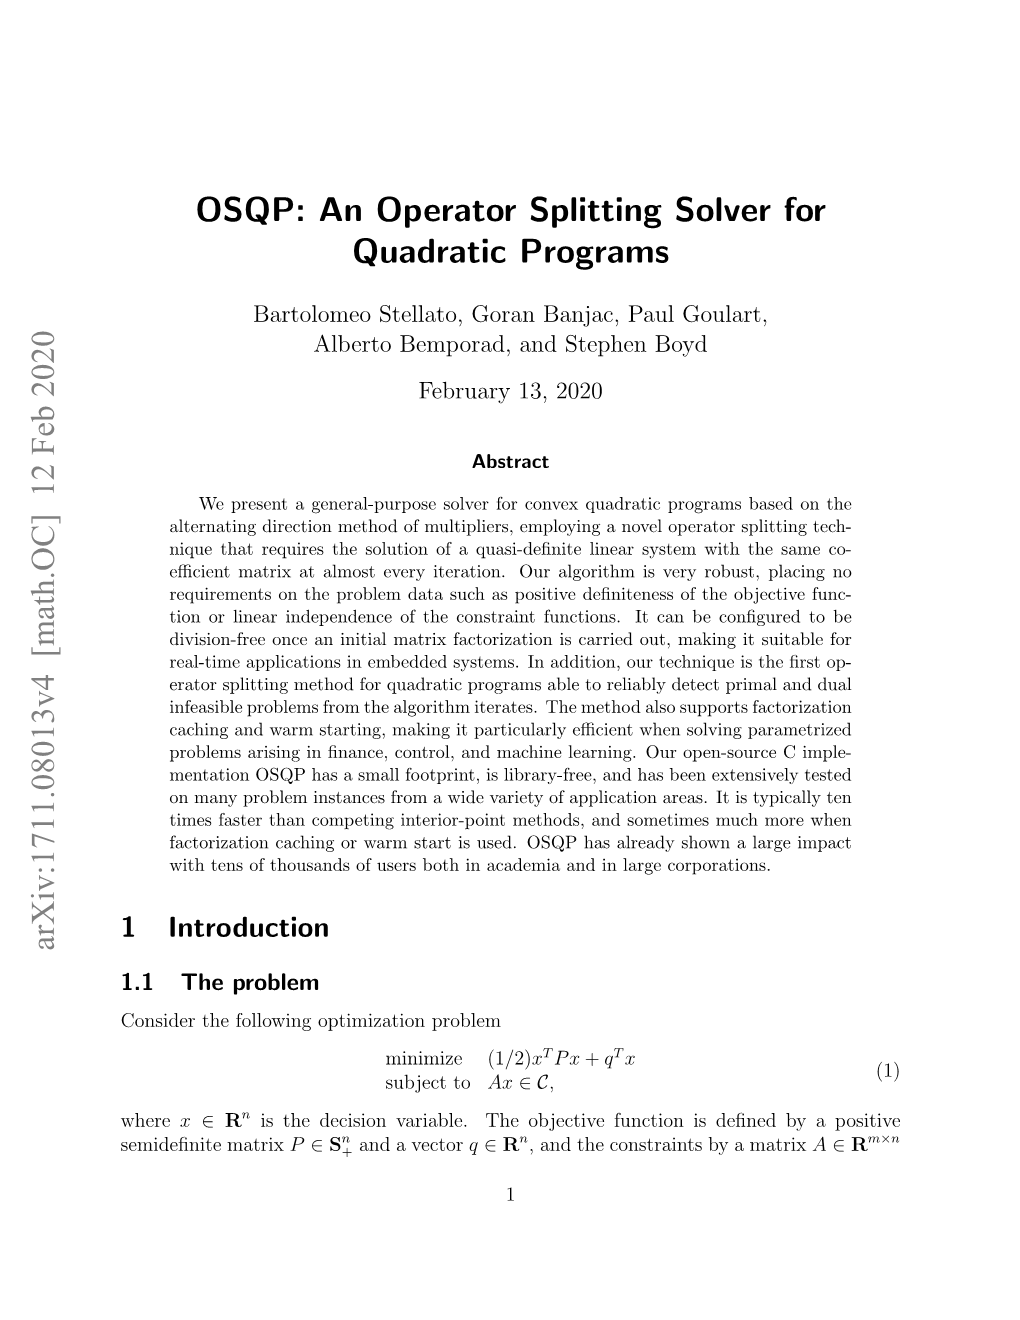 OSQP: an Operator Splitting Solver for Quadratic Programs